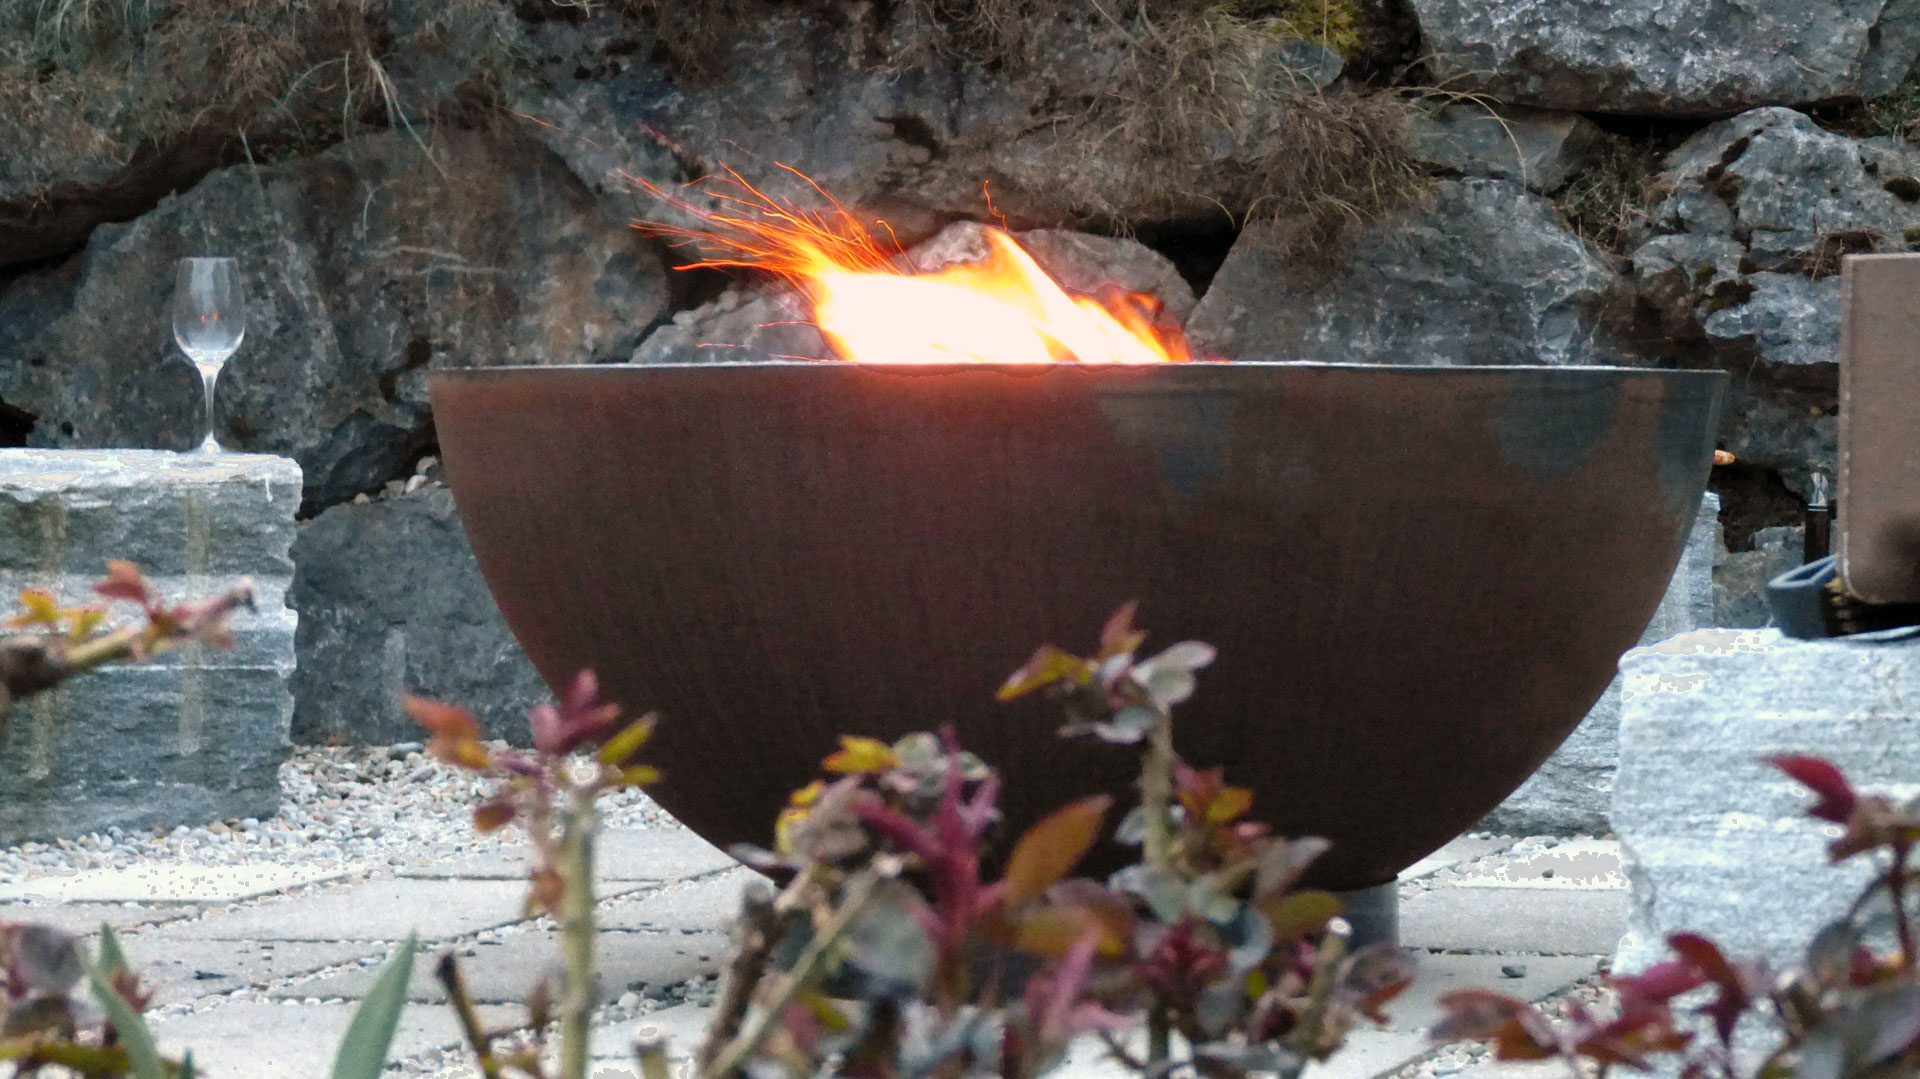 Garden grills and fire bowls by pm outdoor design, Switzerland